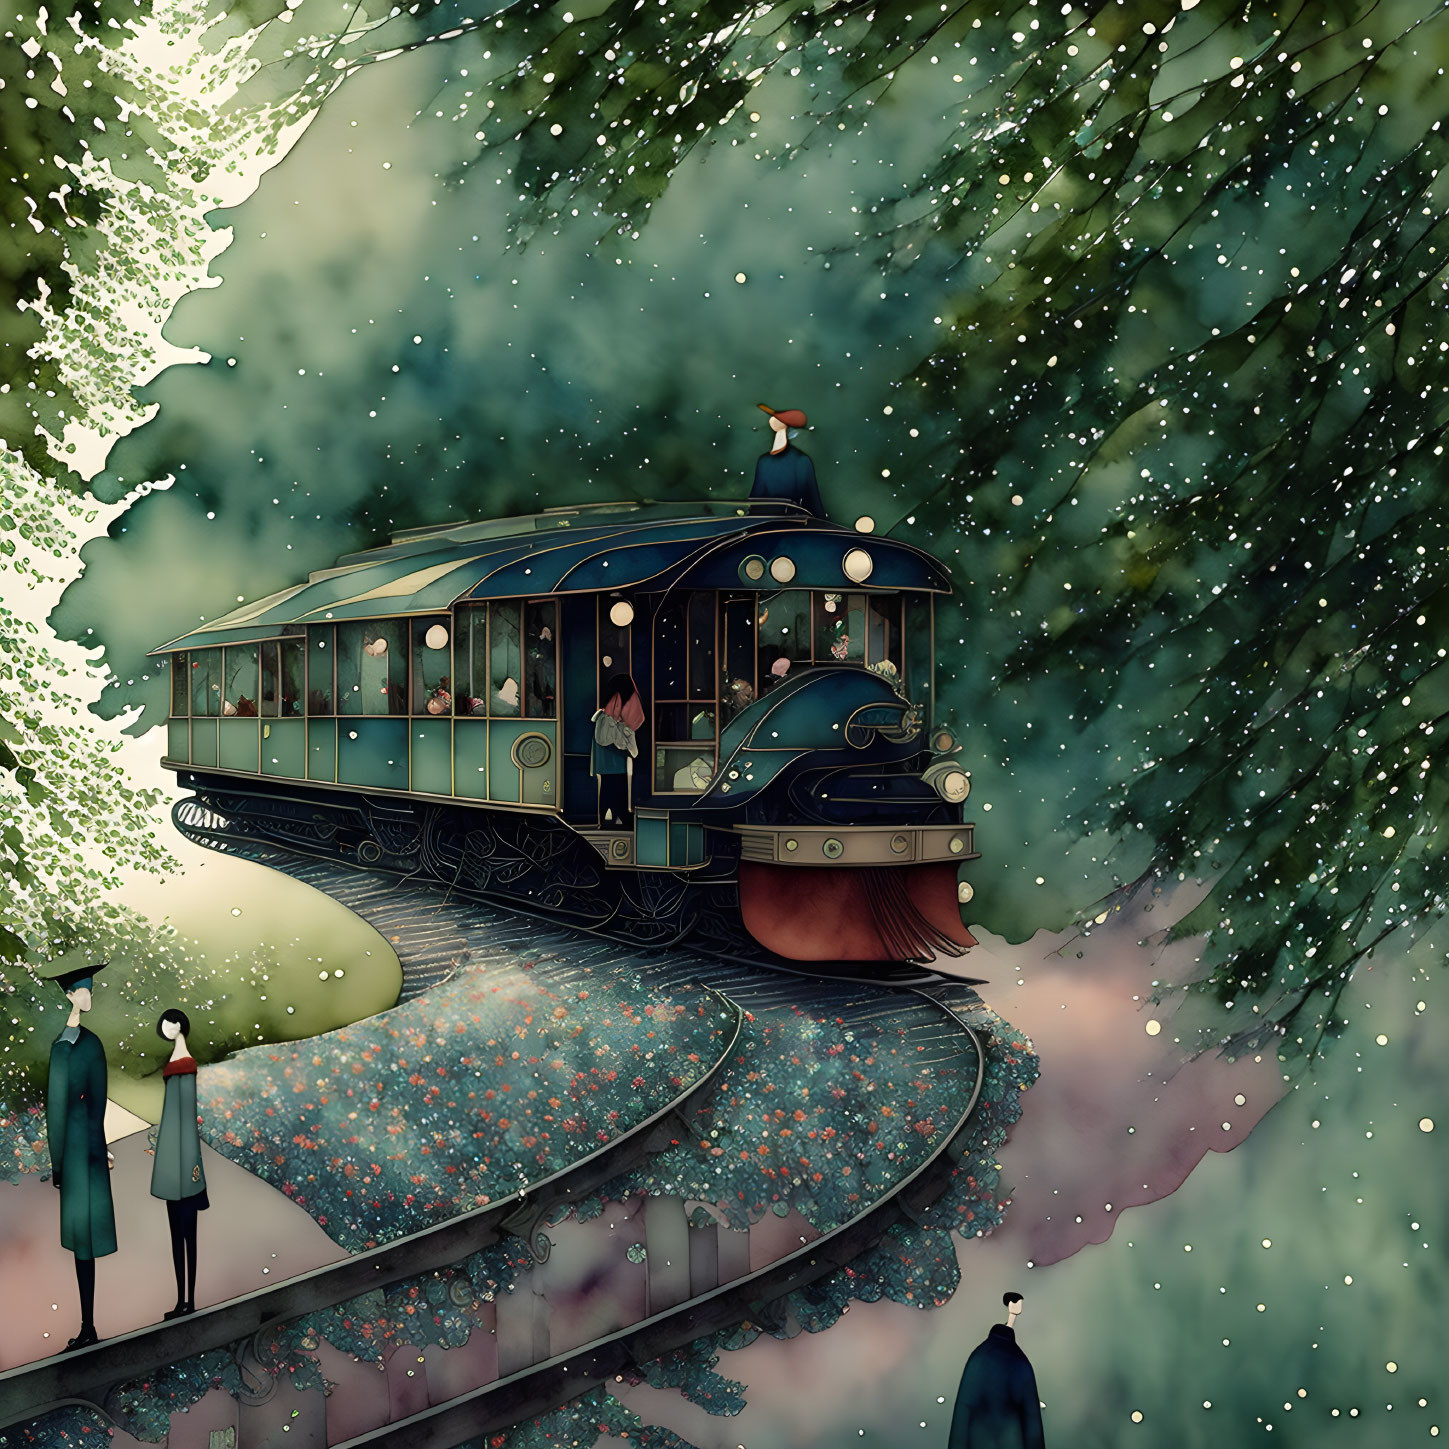 Vintage train scene with passengers in period attire in snowy green landscape